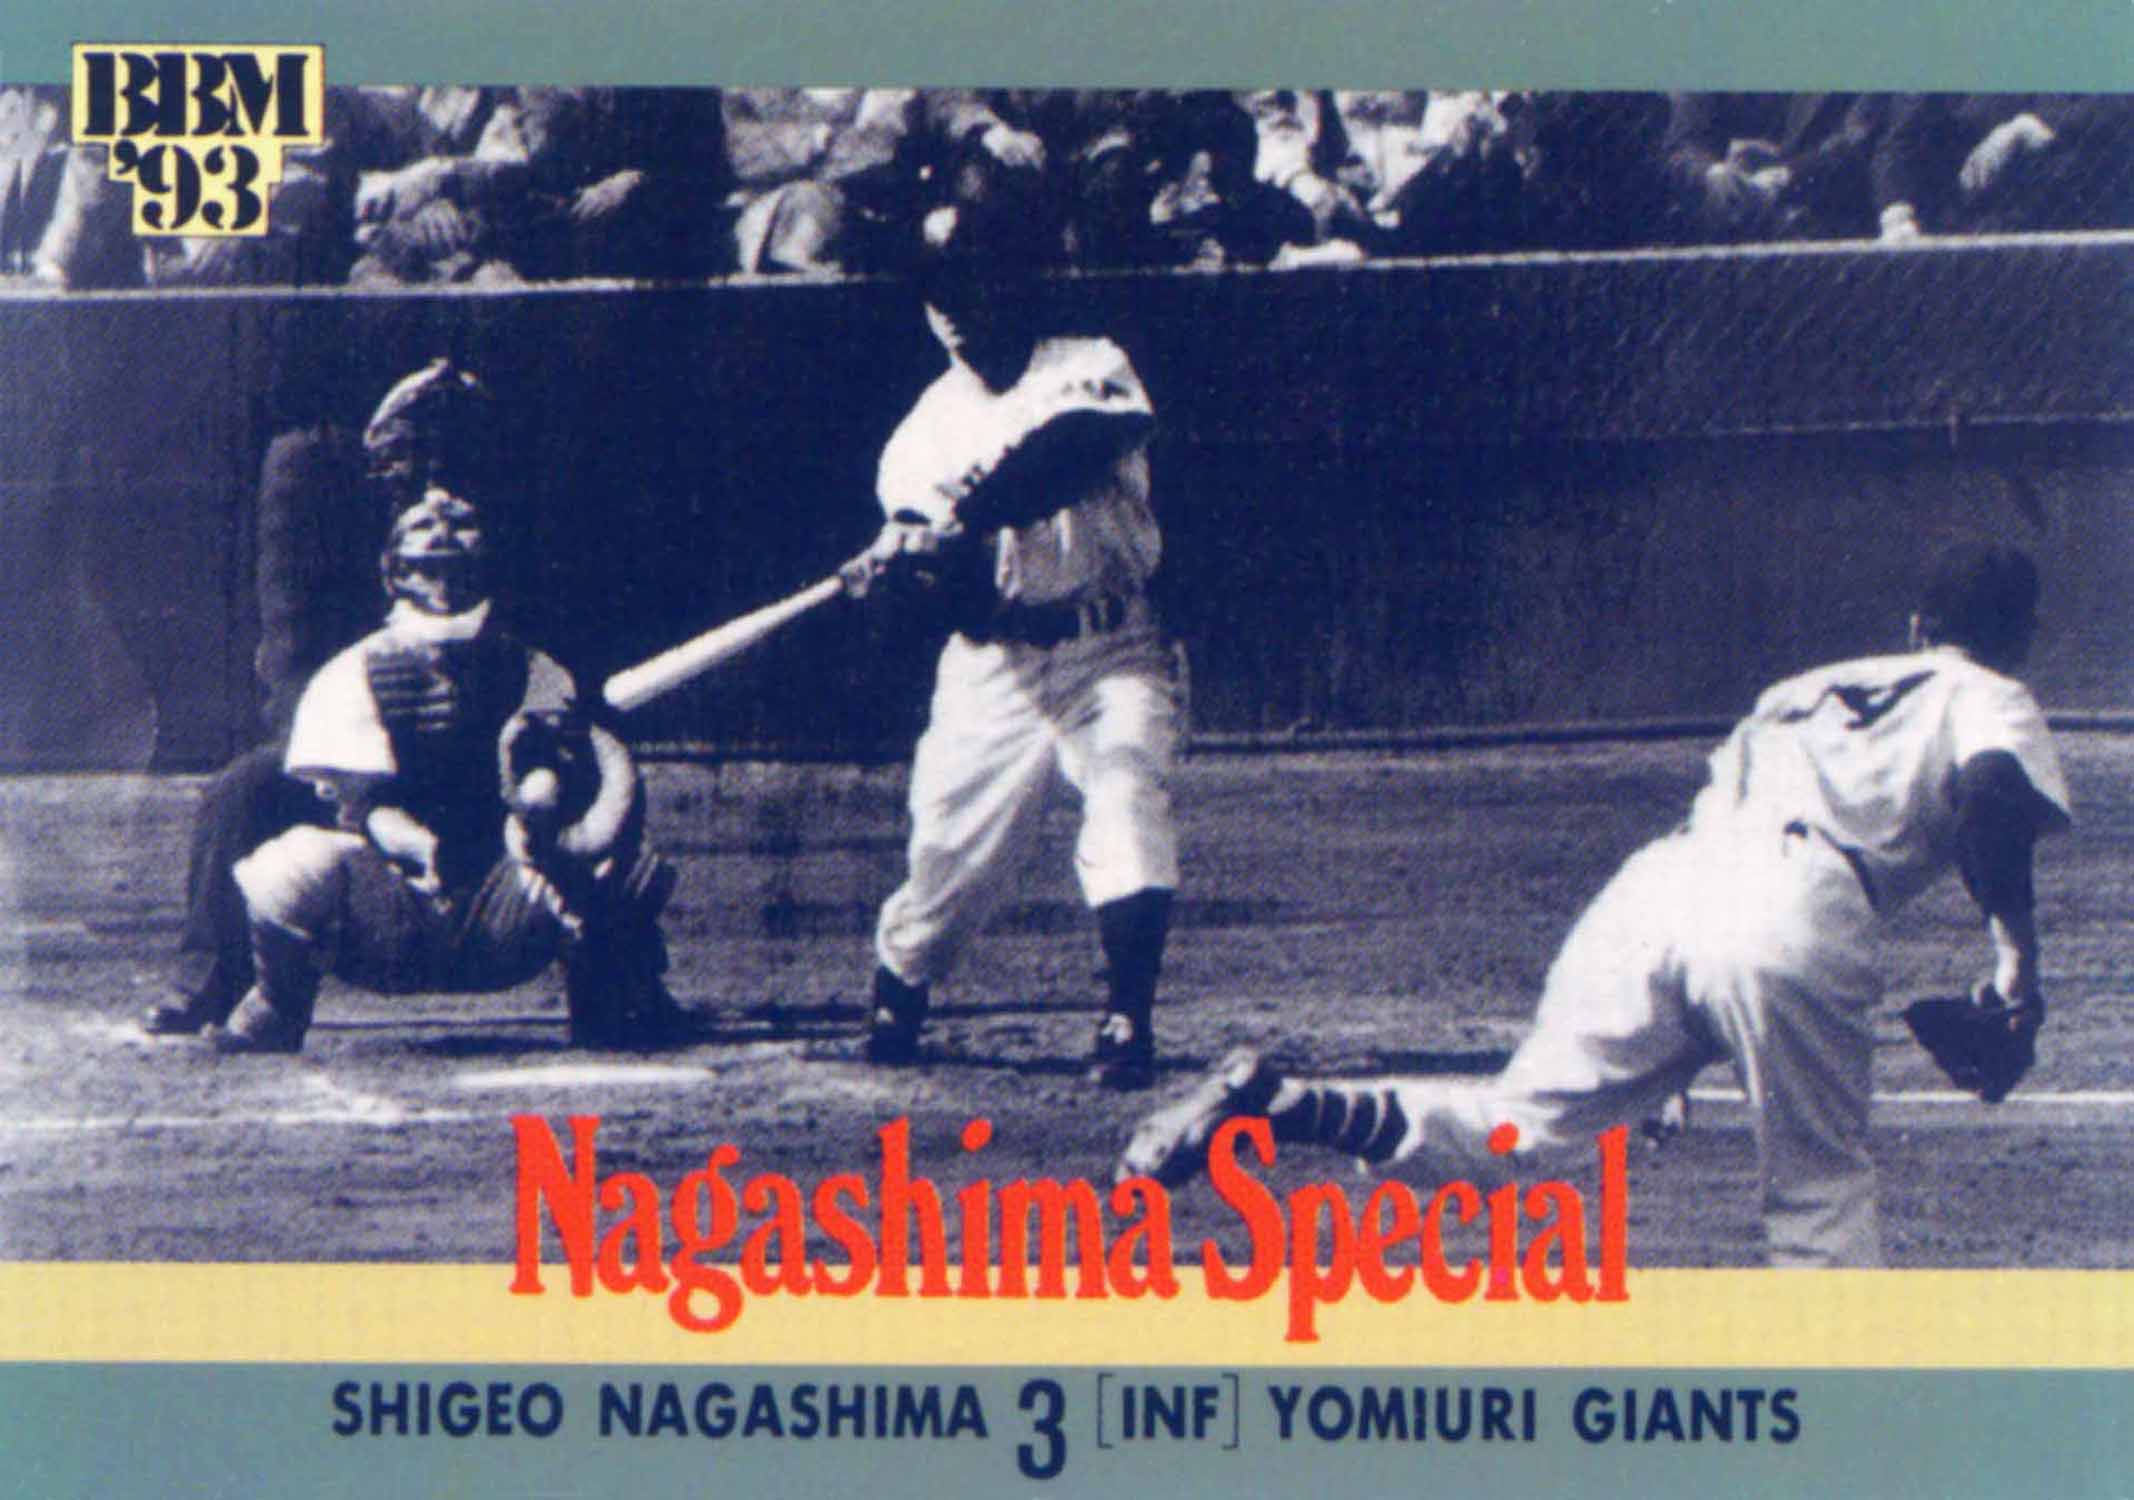 1993 BBM Japan Nagashima Special